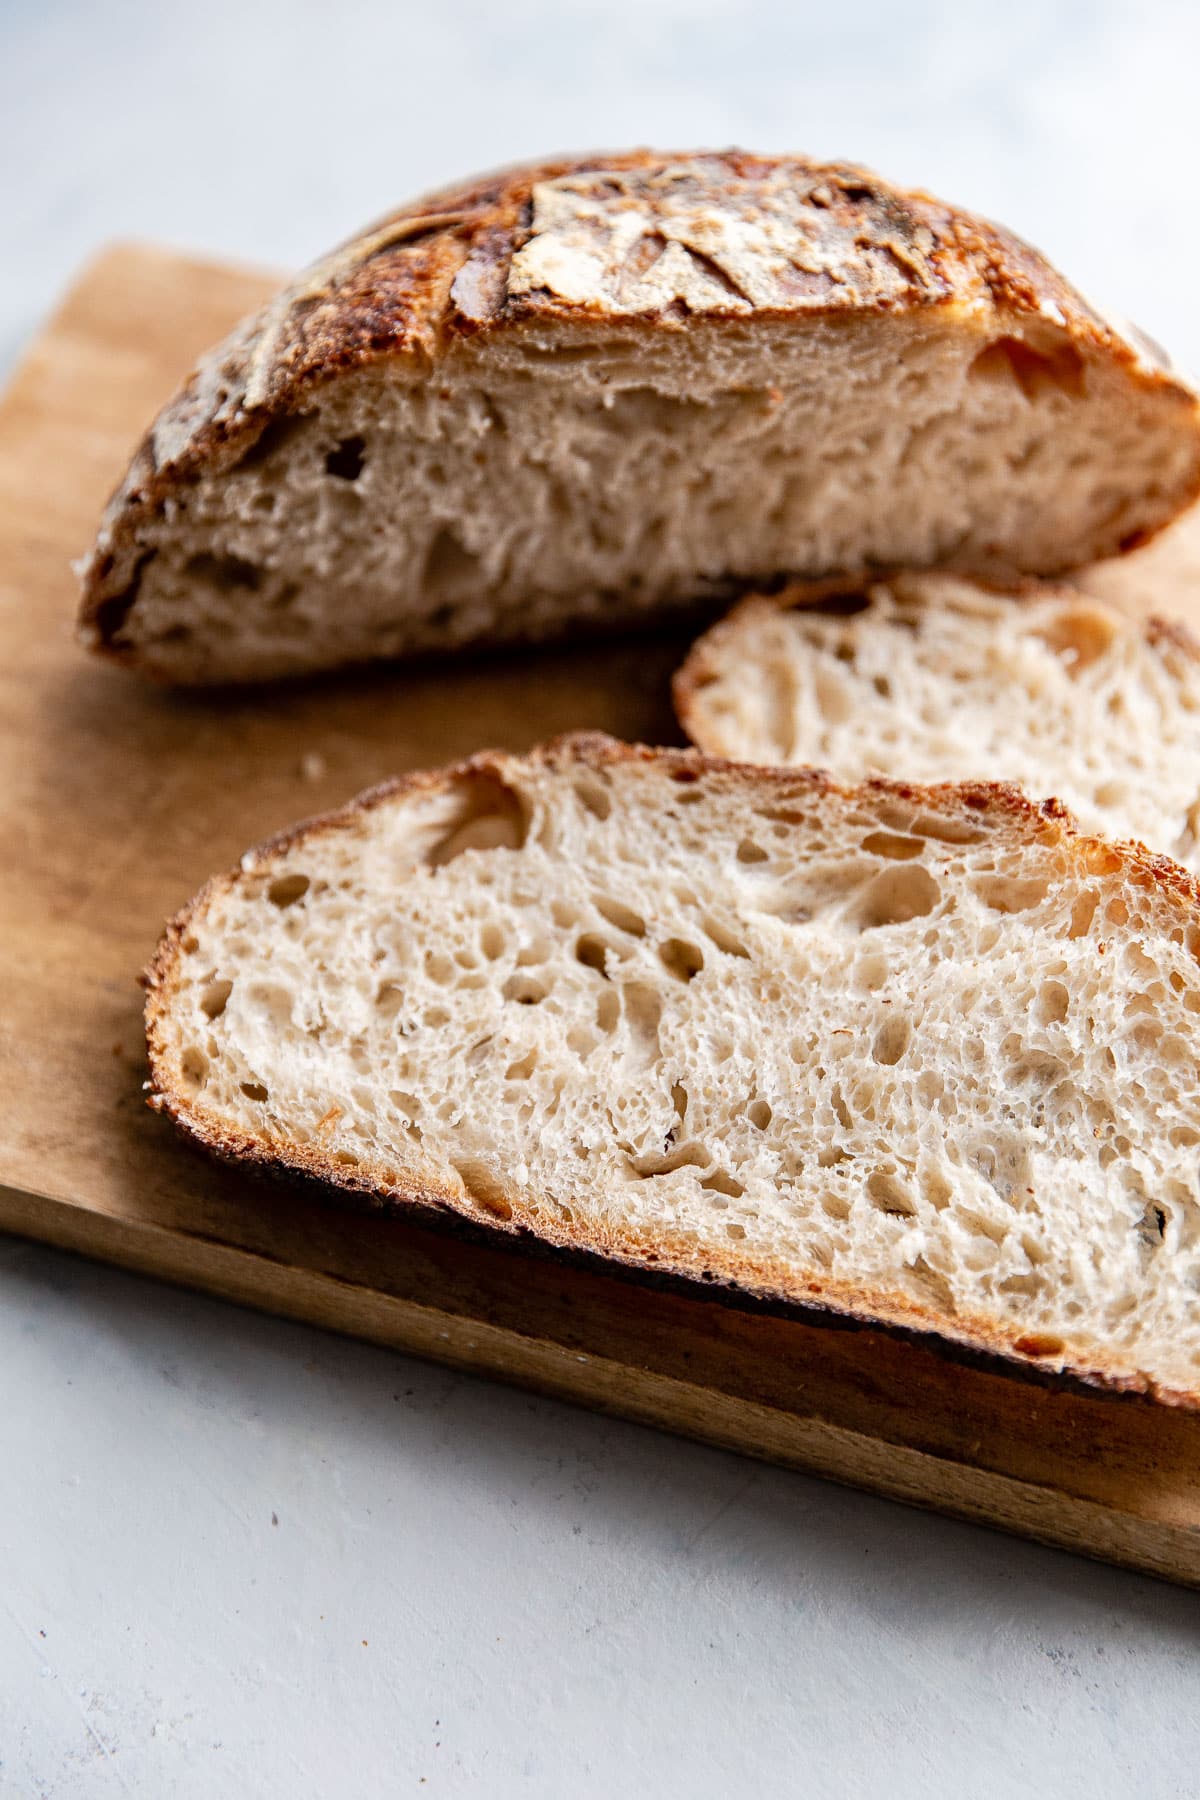 https://www.abeautifulplate.com/wp-content/uploads/2019/01/how-to-store-bread-1-8.jpg